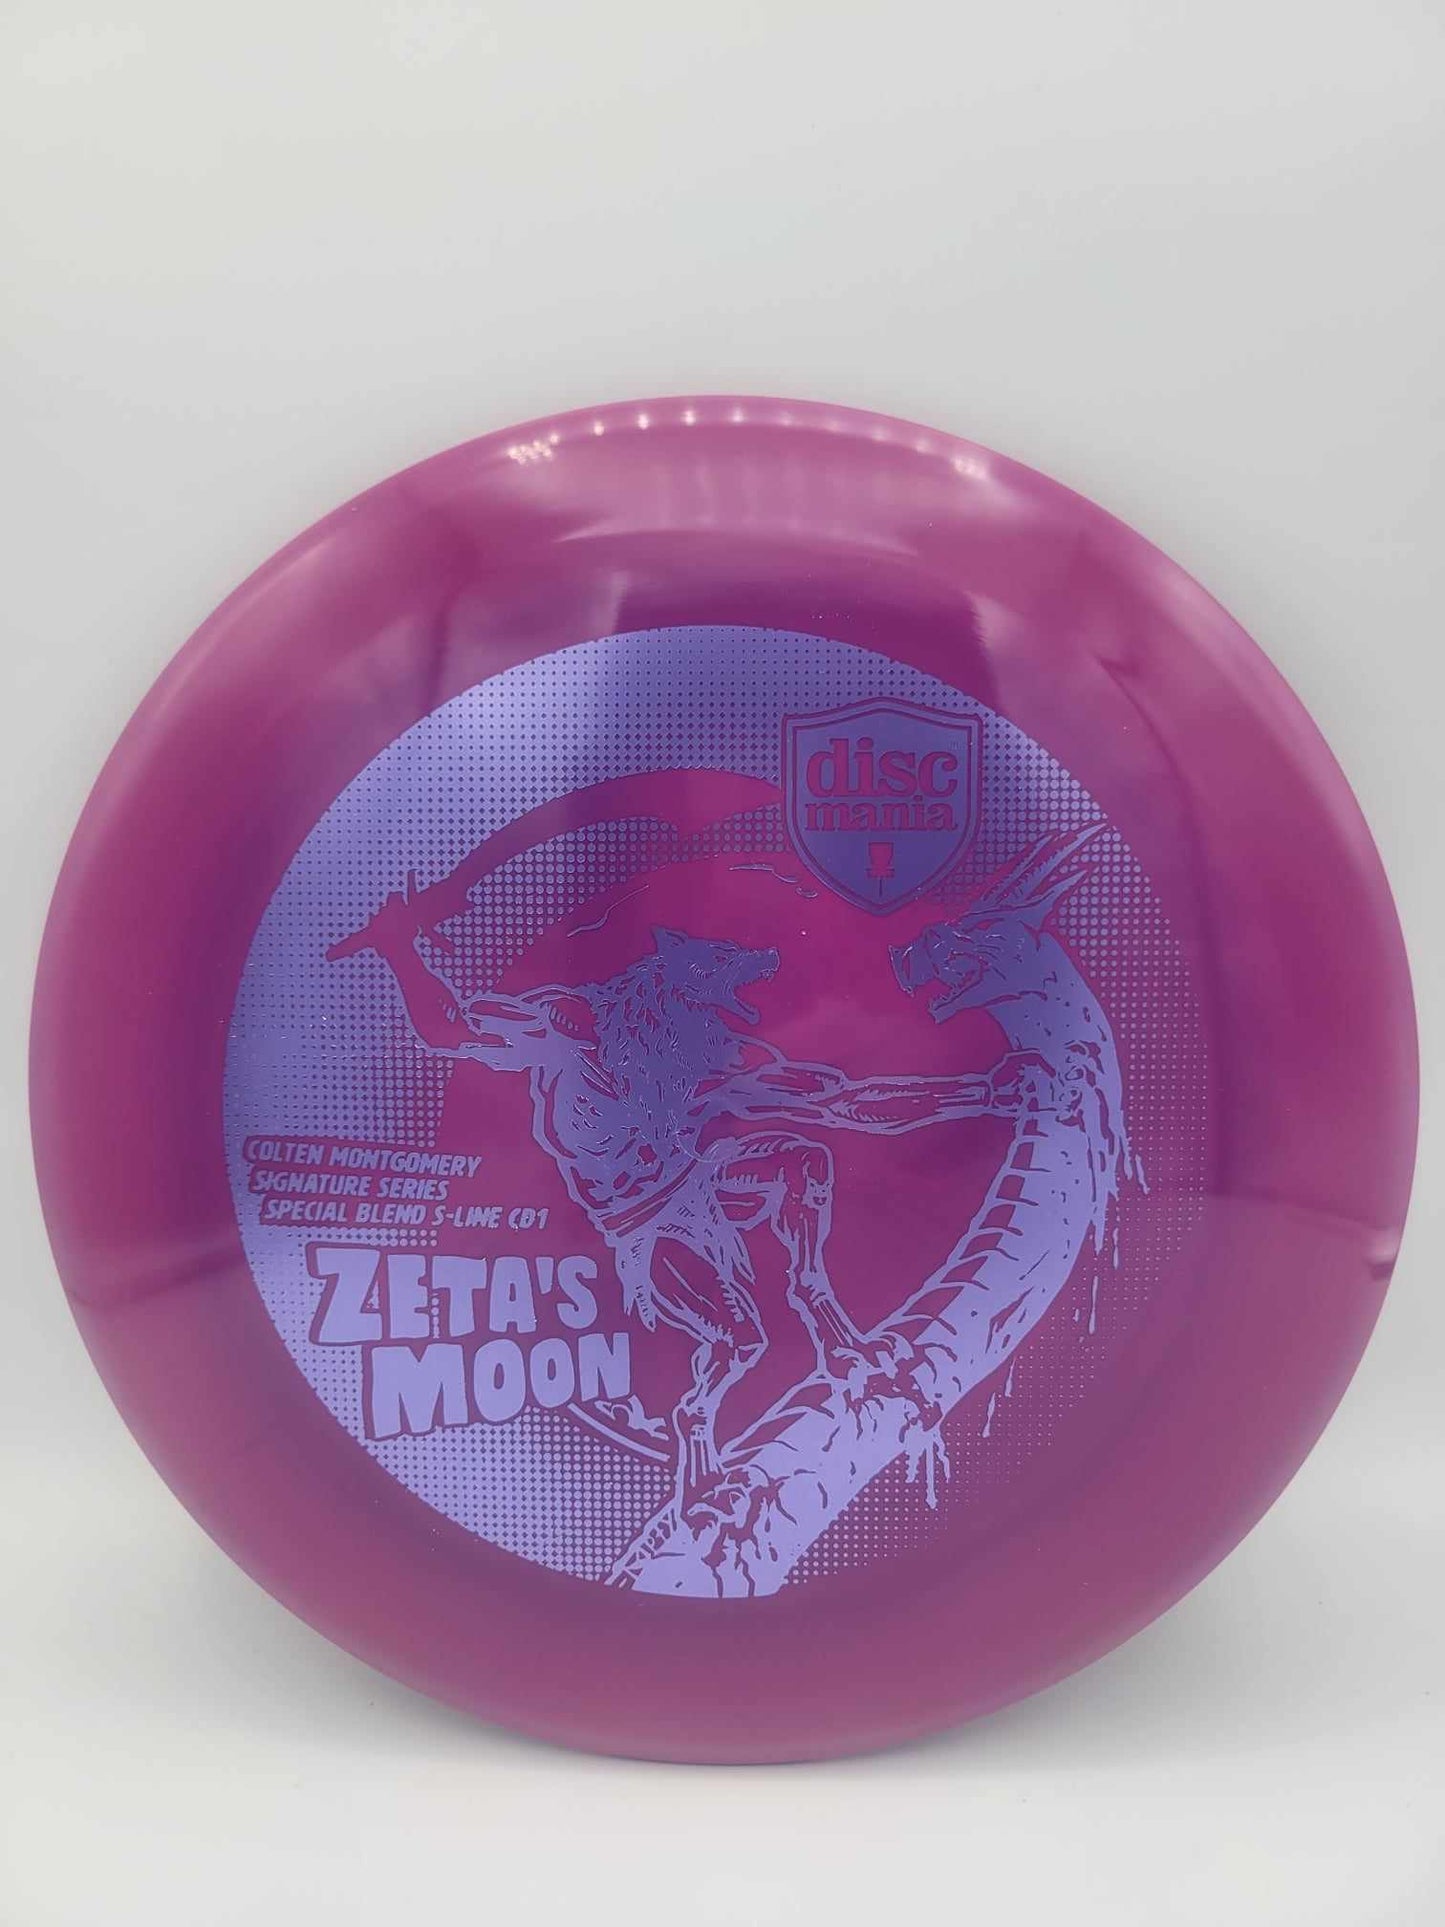 Zeta's Moon - Colten Montgomery Signature Series Special Blend S-Line CD1  9/5/-1/2